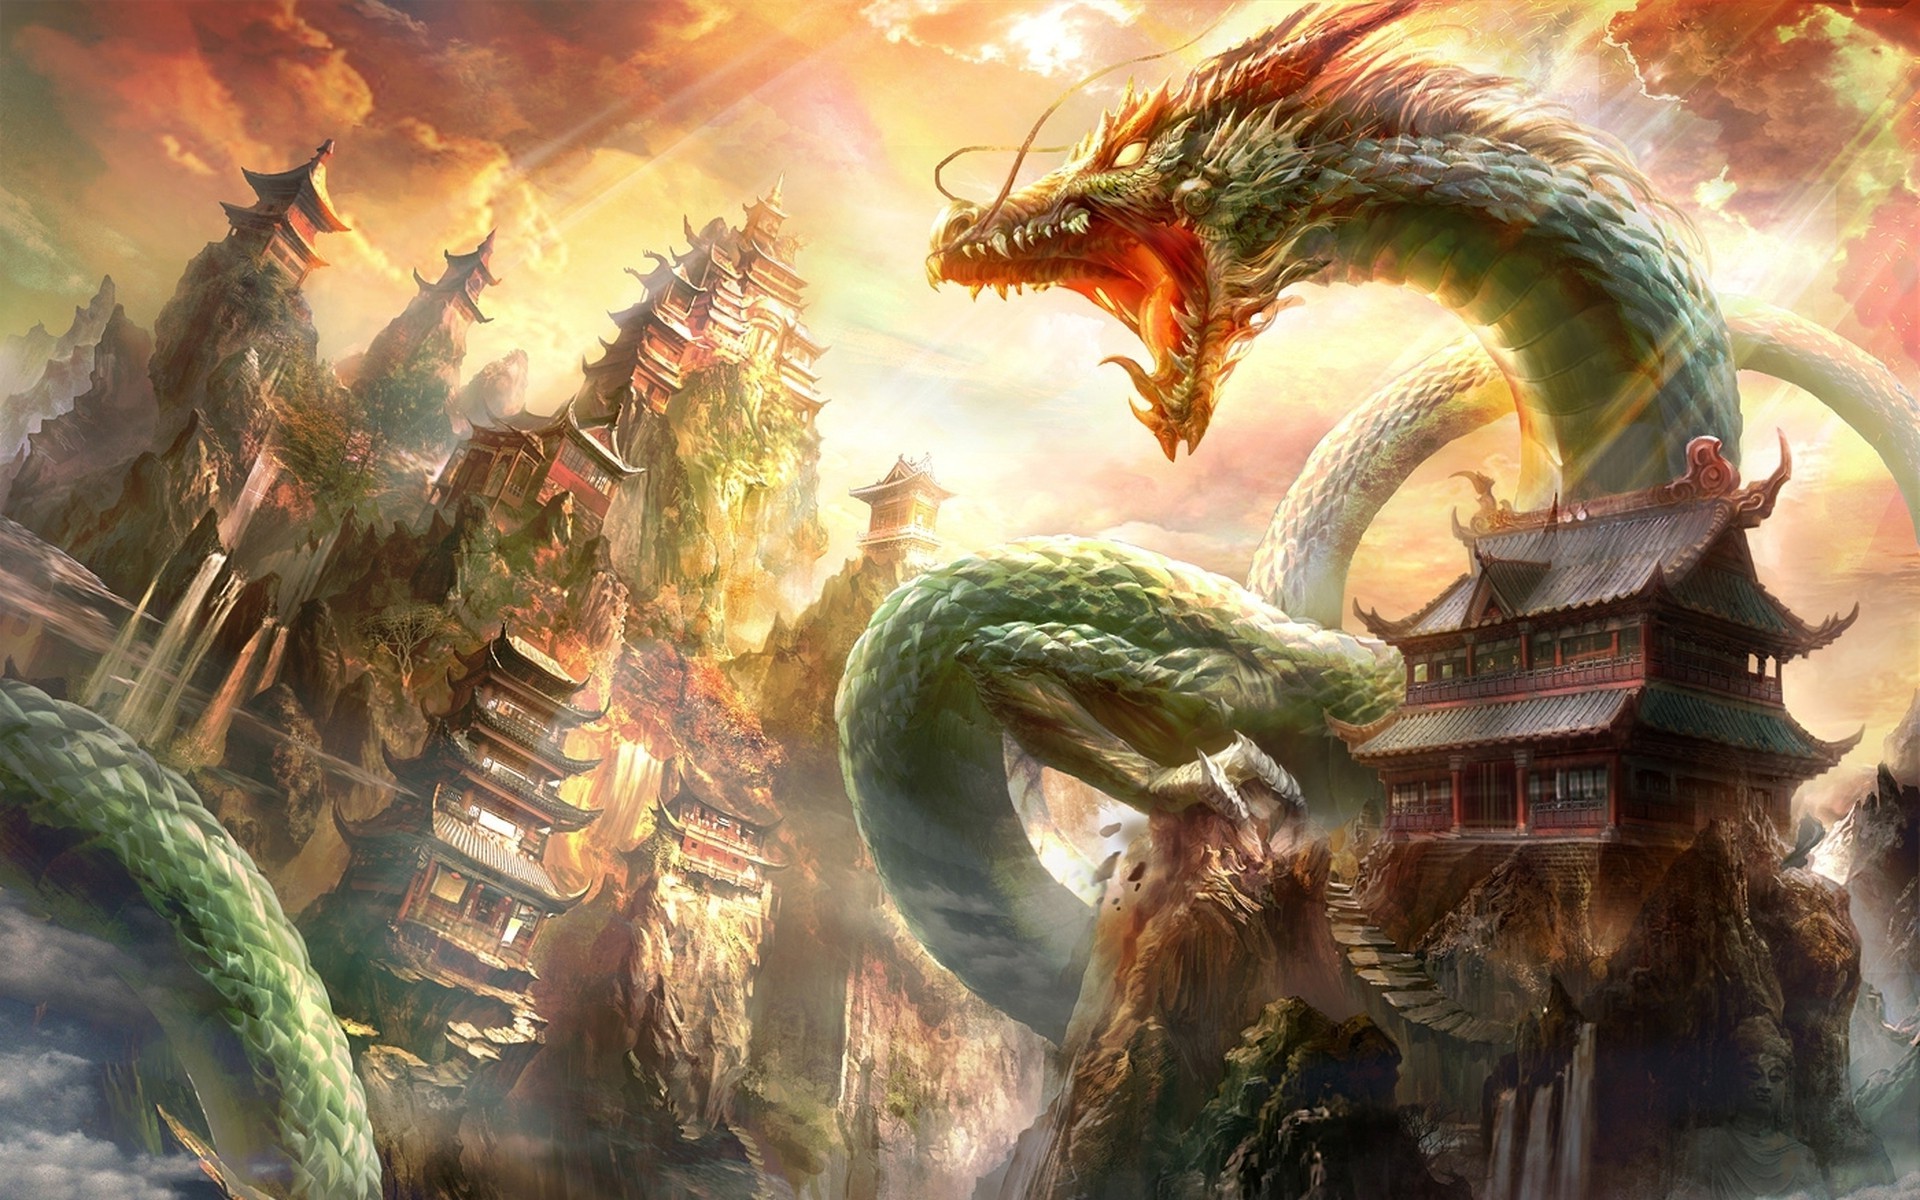 https://wallup.net/wp-content/uploads/2016/04/10/209671-fantasy_art-dragon-China.jpg